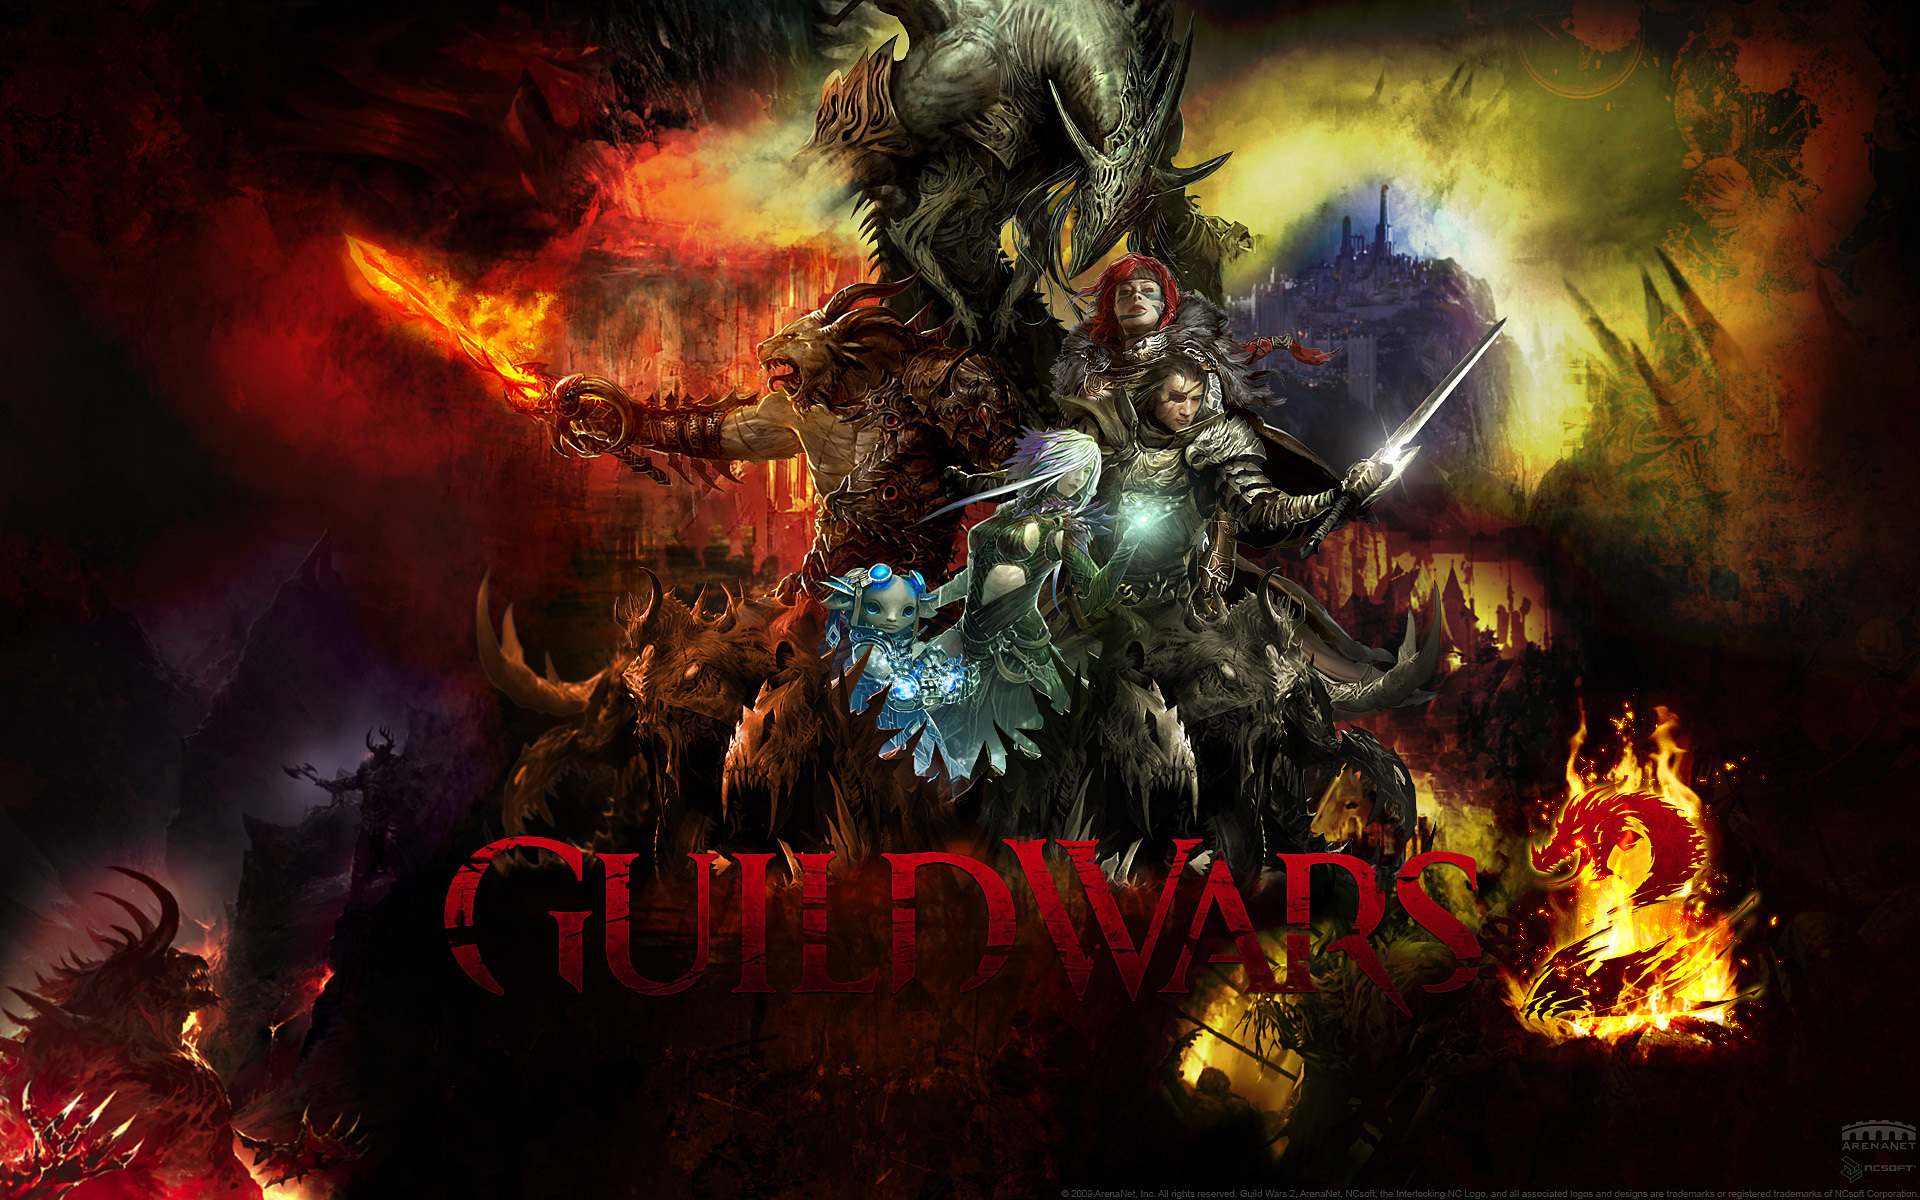 Baixar papel de parede para celular de Videogame, Guild Wars 2, Guild Wars gratuito.